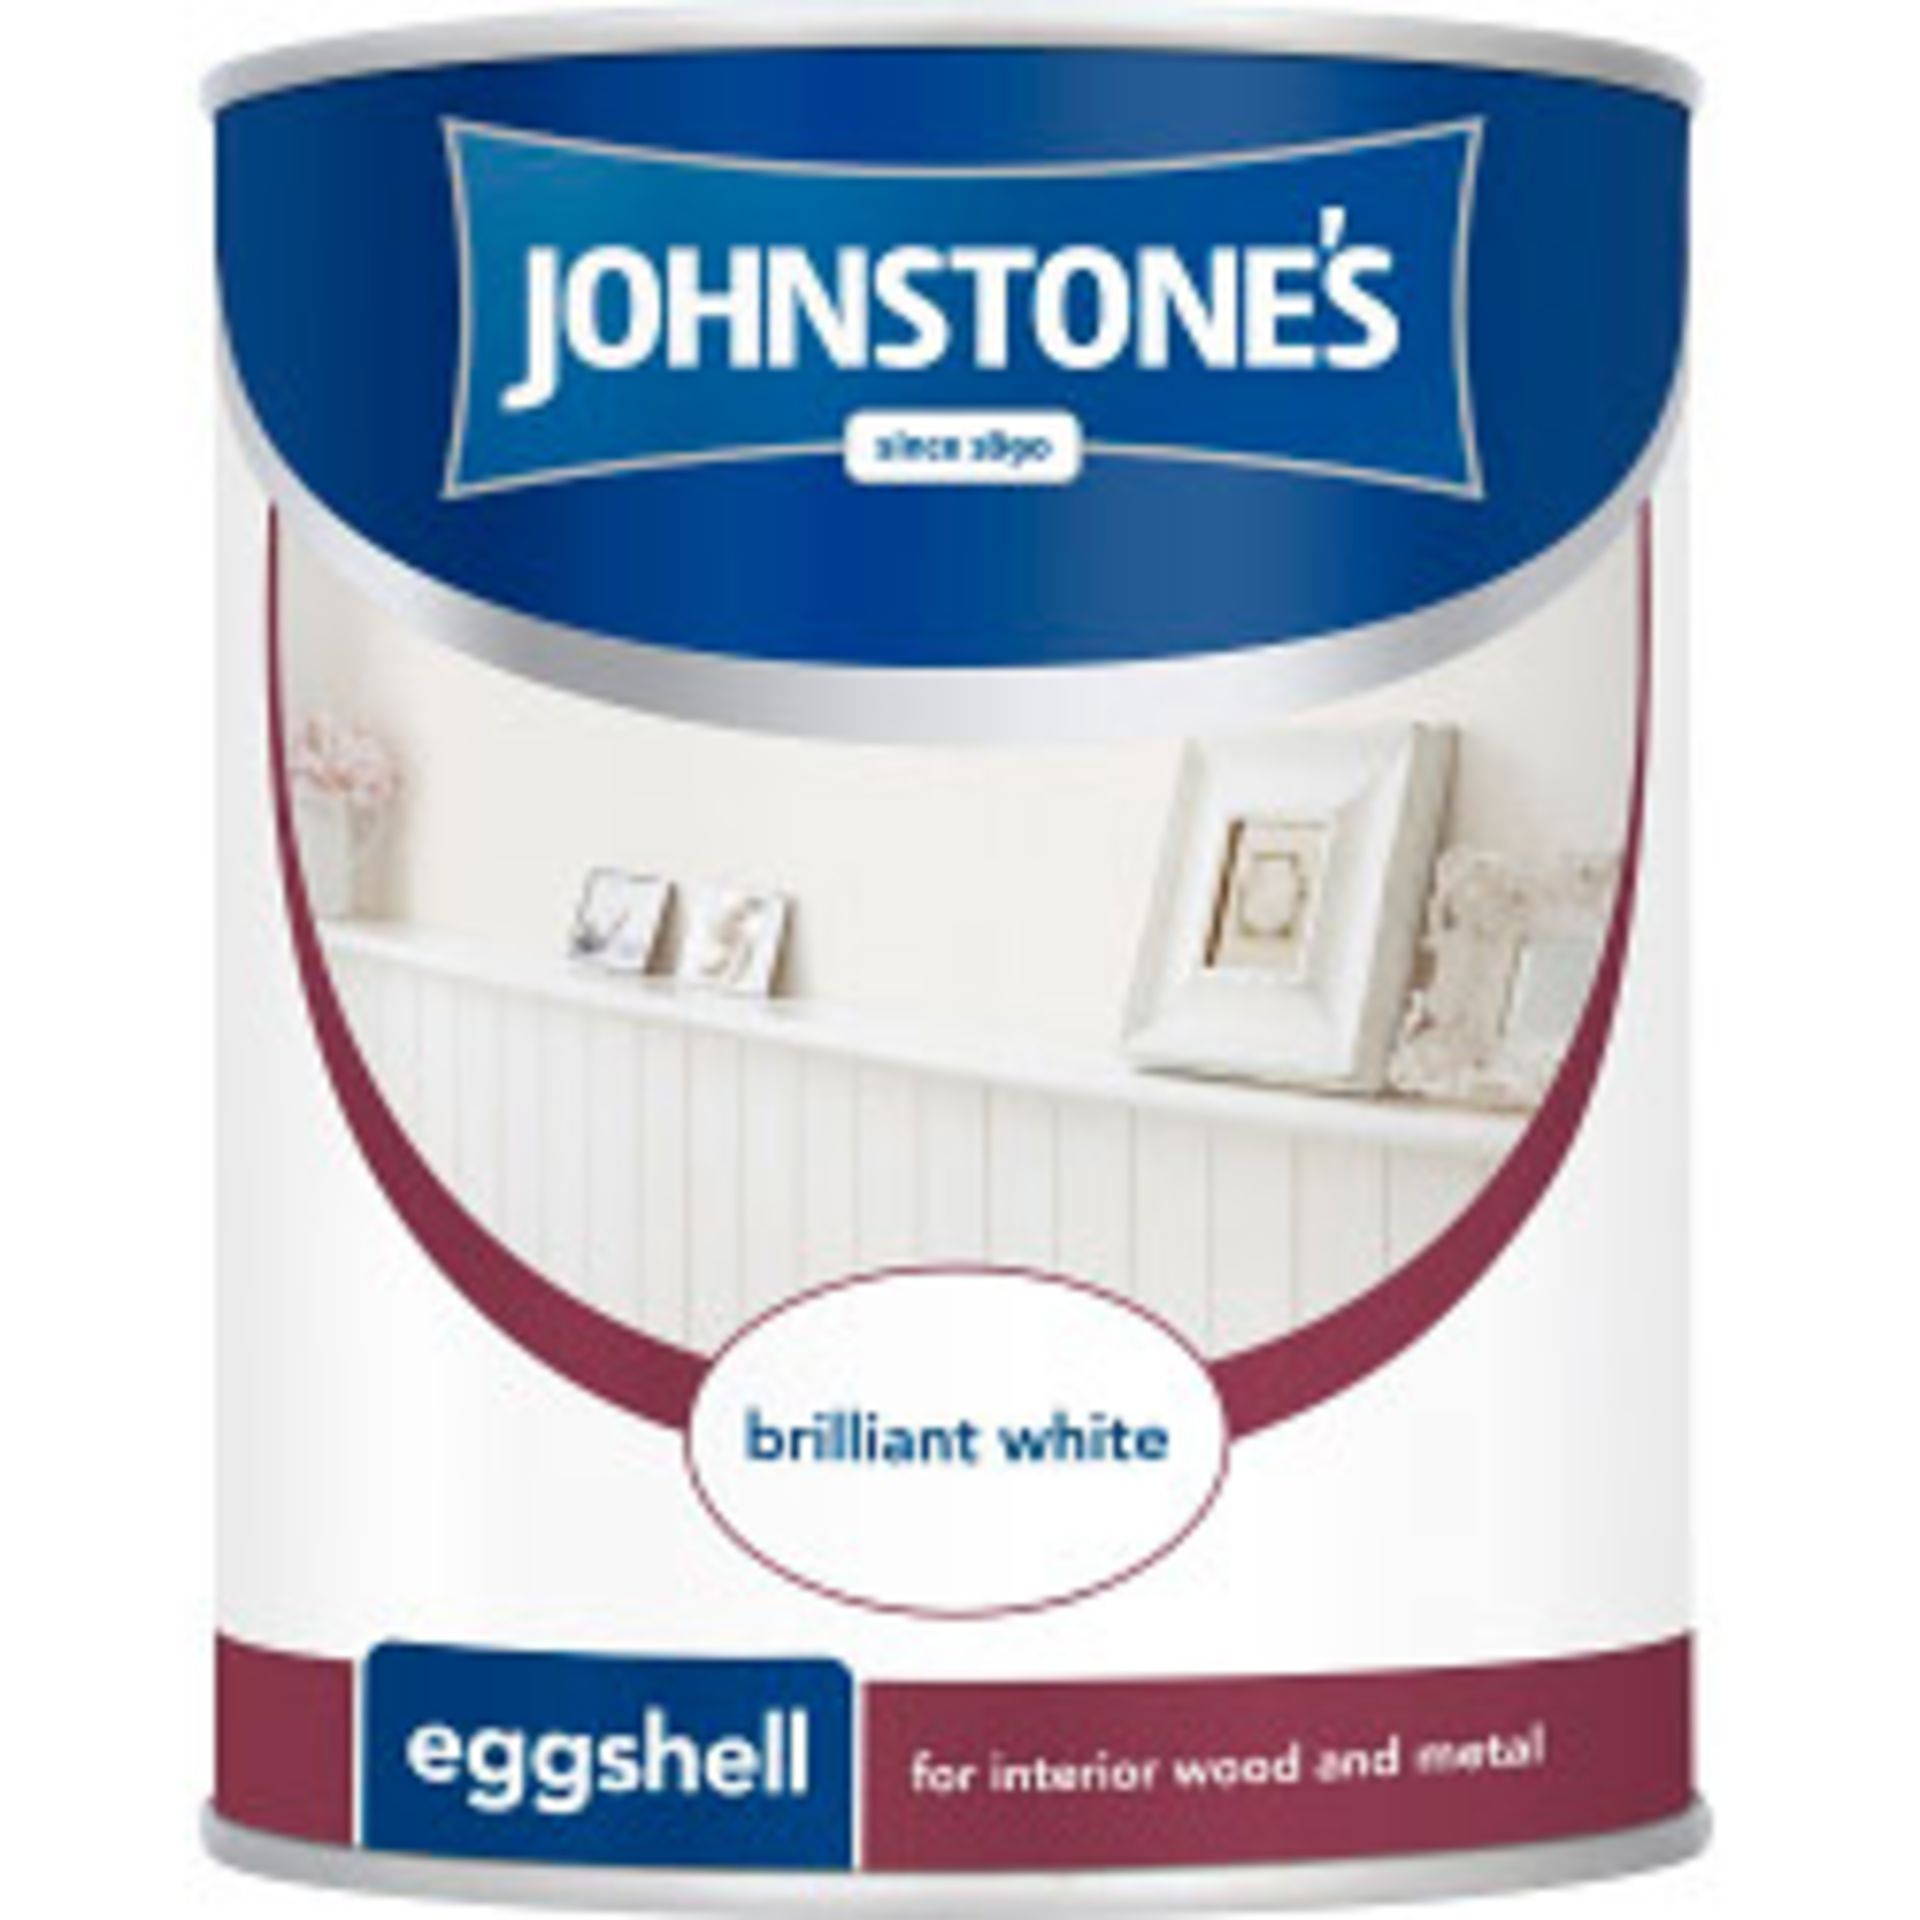 V  Grade A Johnstones 1.25L Brilliant White Eggshell Paint - Image 2 of 2